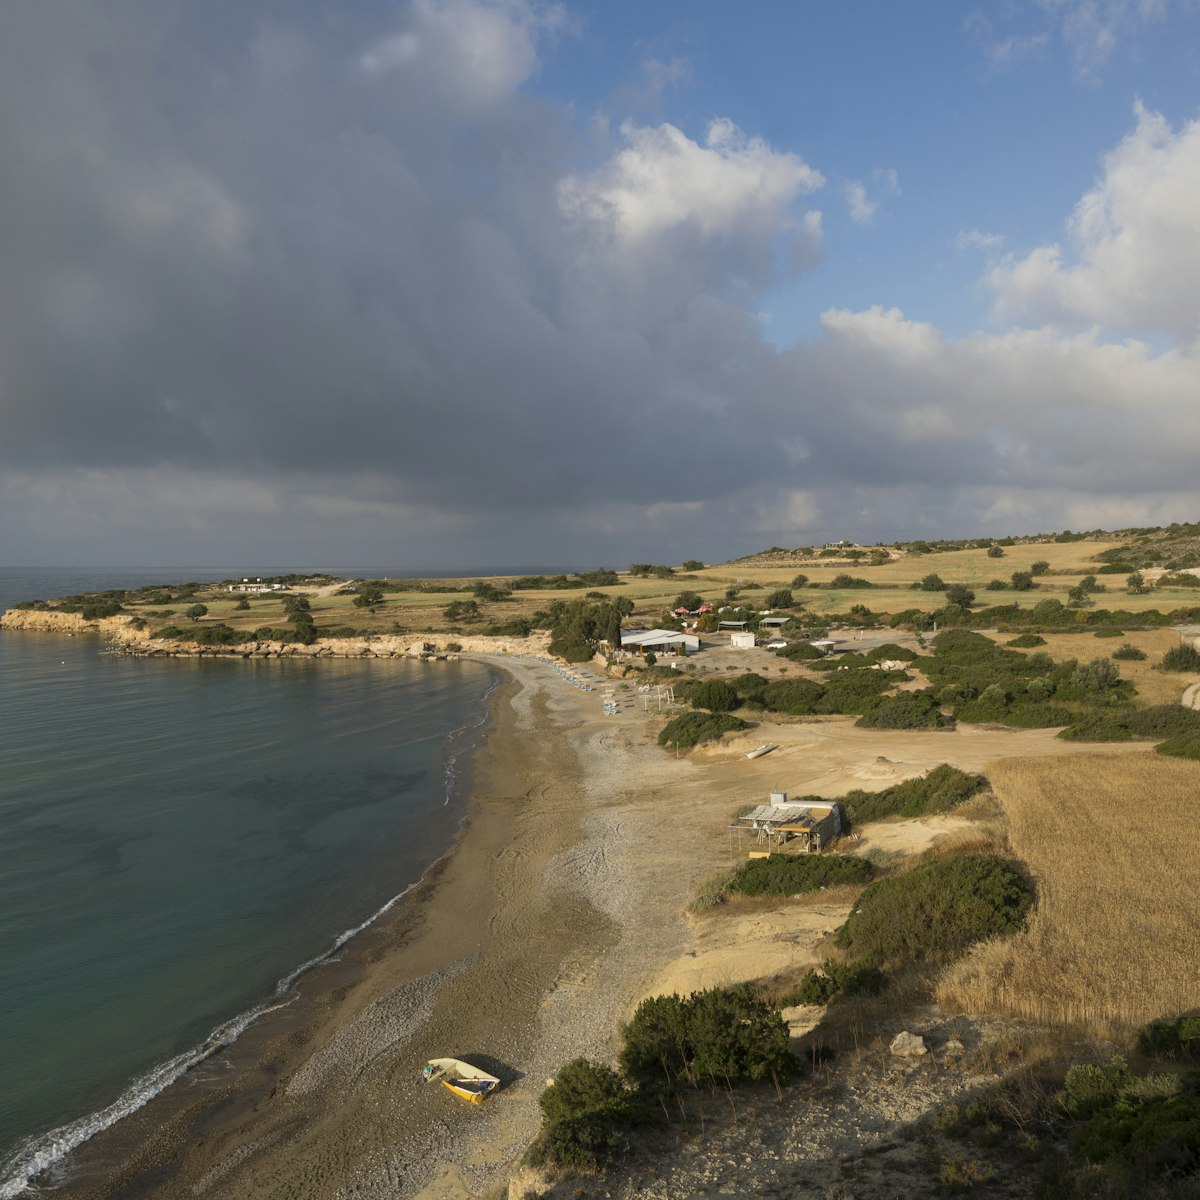 Early morning light at Melanda Beach in Cyprus.